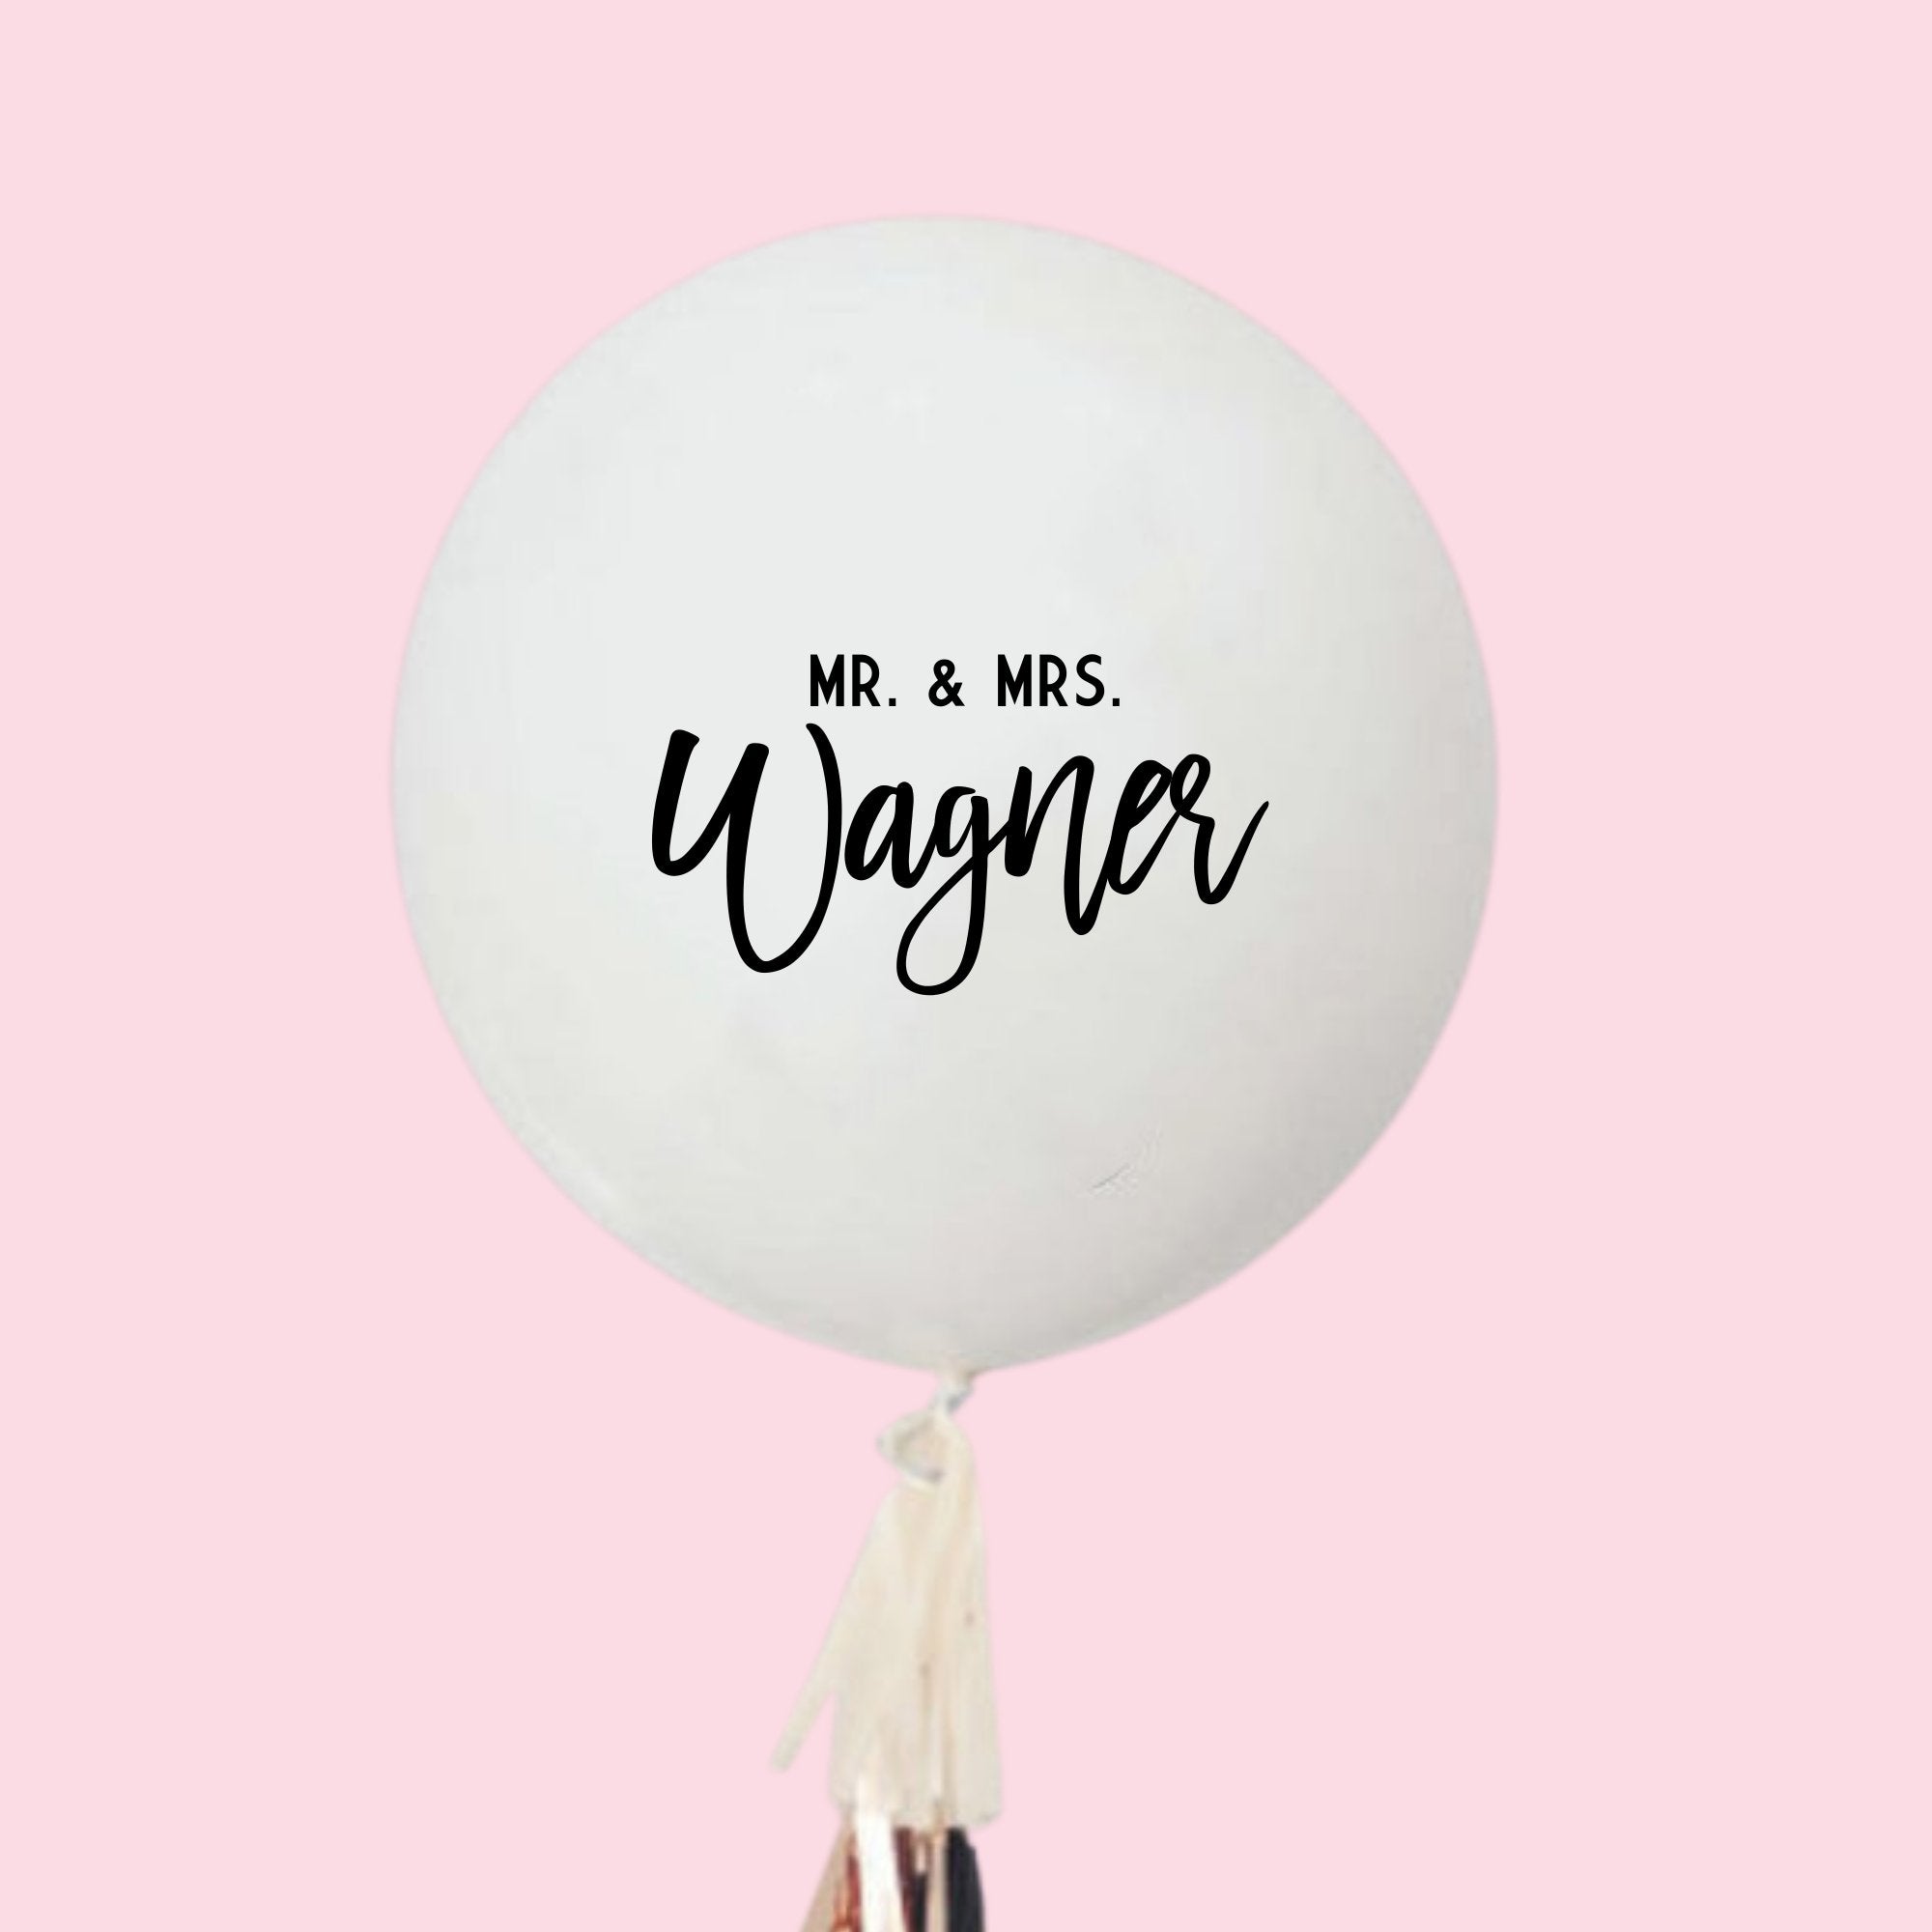 A white jumbo balloon reads "Mr. & Mrs. Wagner"